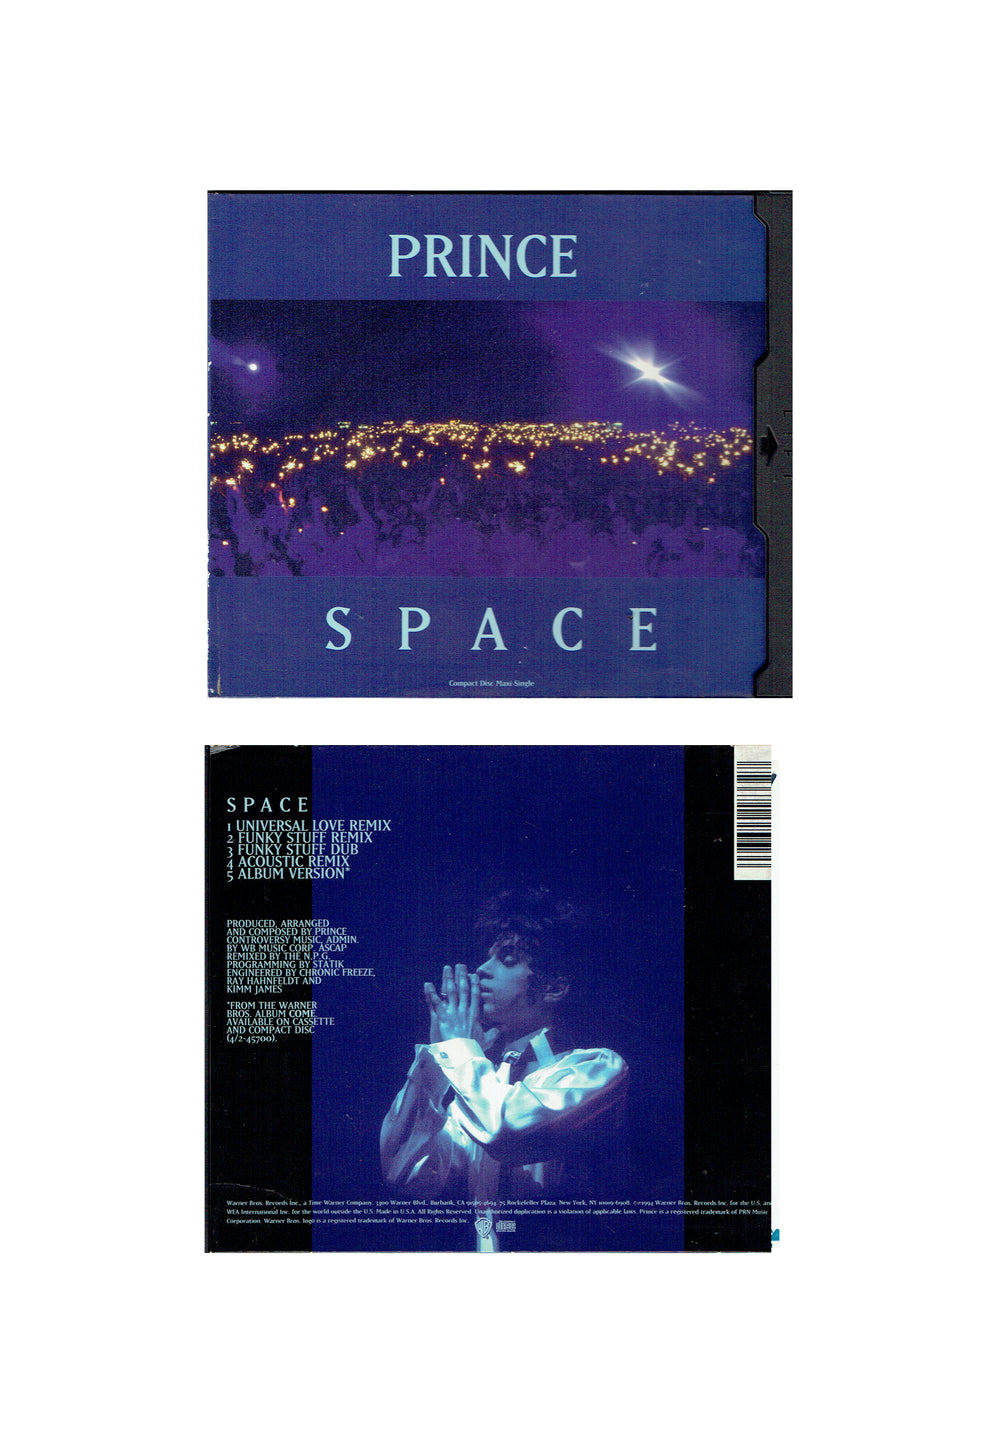 Prince Space Original Maxi CD Single 1994 Flip Case 5 Tracks EXCELLENT COND